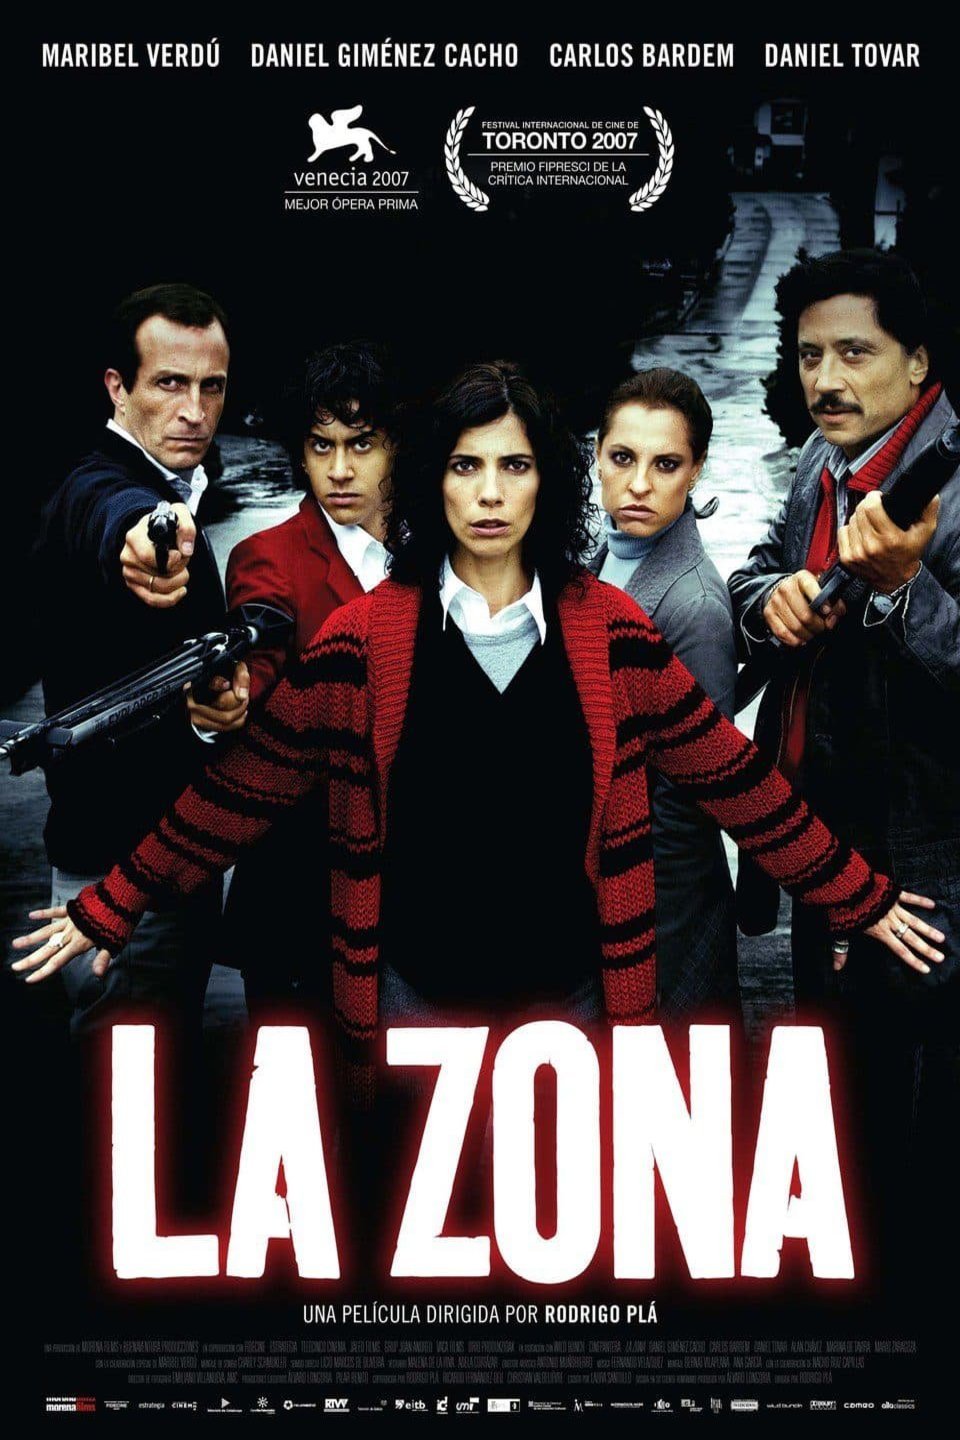 Spanish poster of the movie La zona